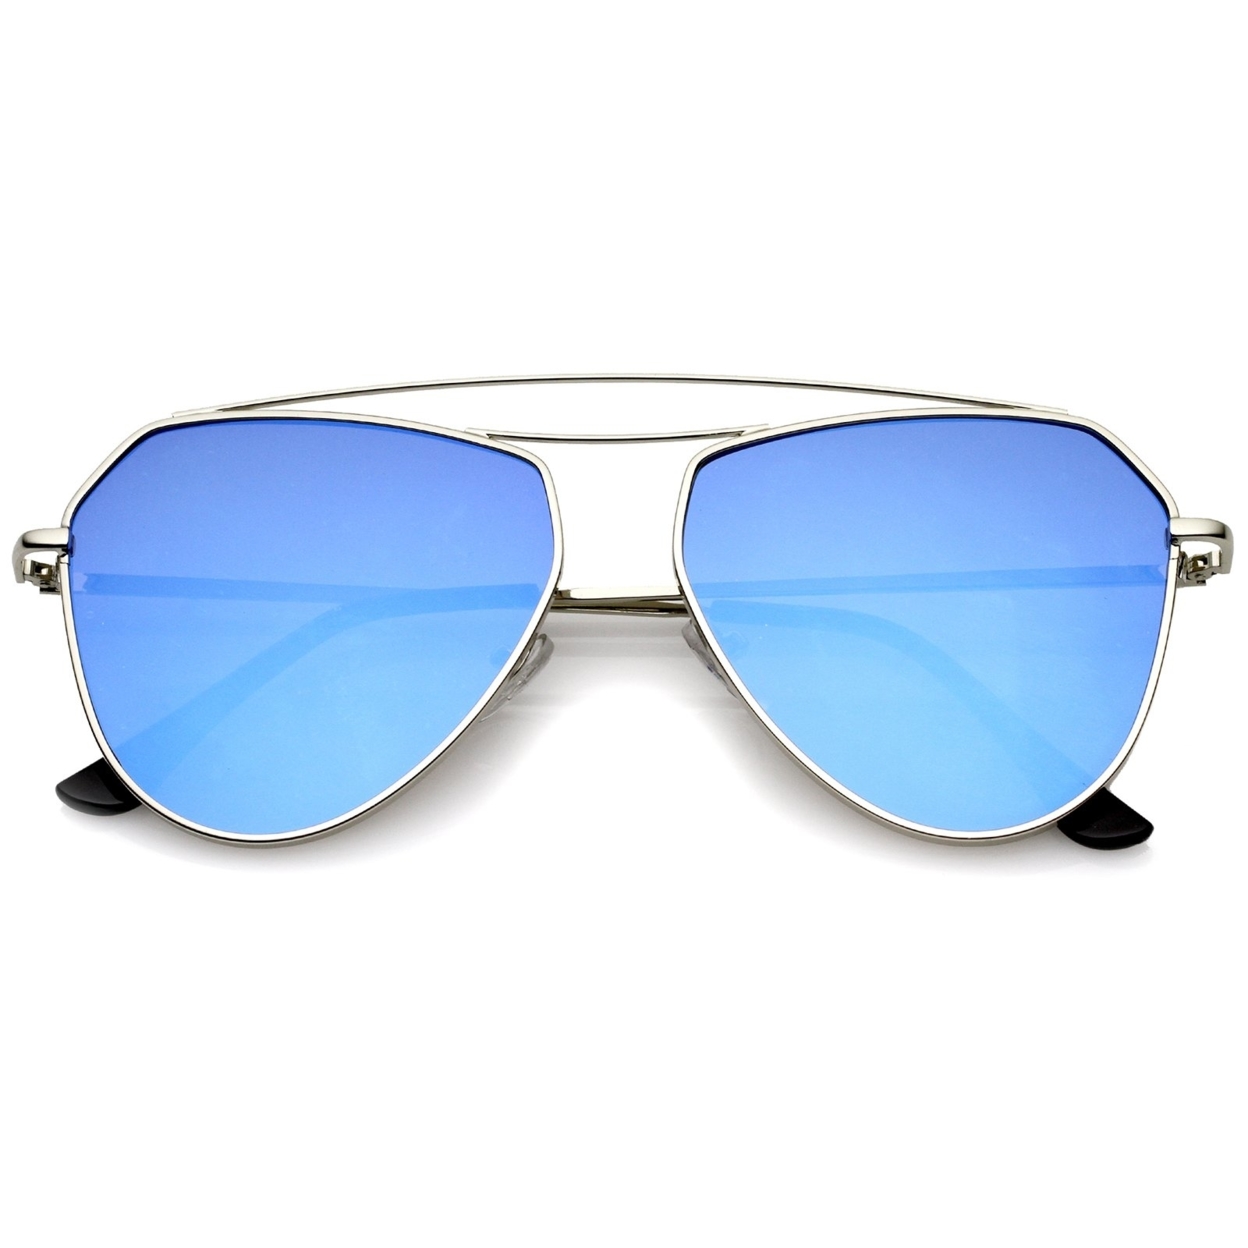 Modern Metal Frame Double Bridge Colored Mirror Flat Lens Aviator Sunglasses 52mm - Silver / Silver Mirror